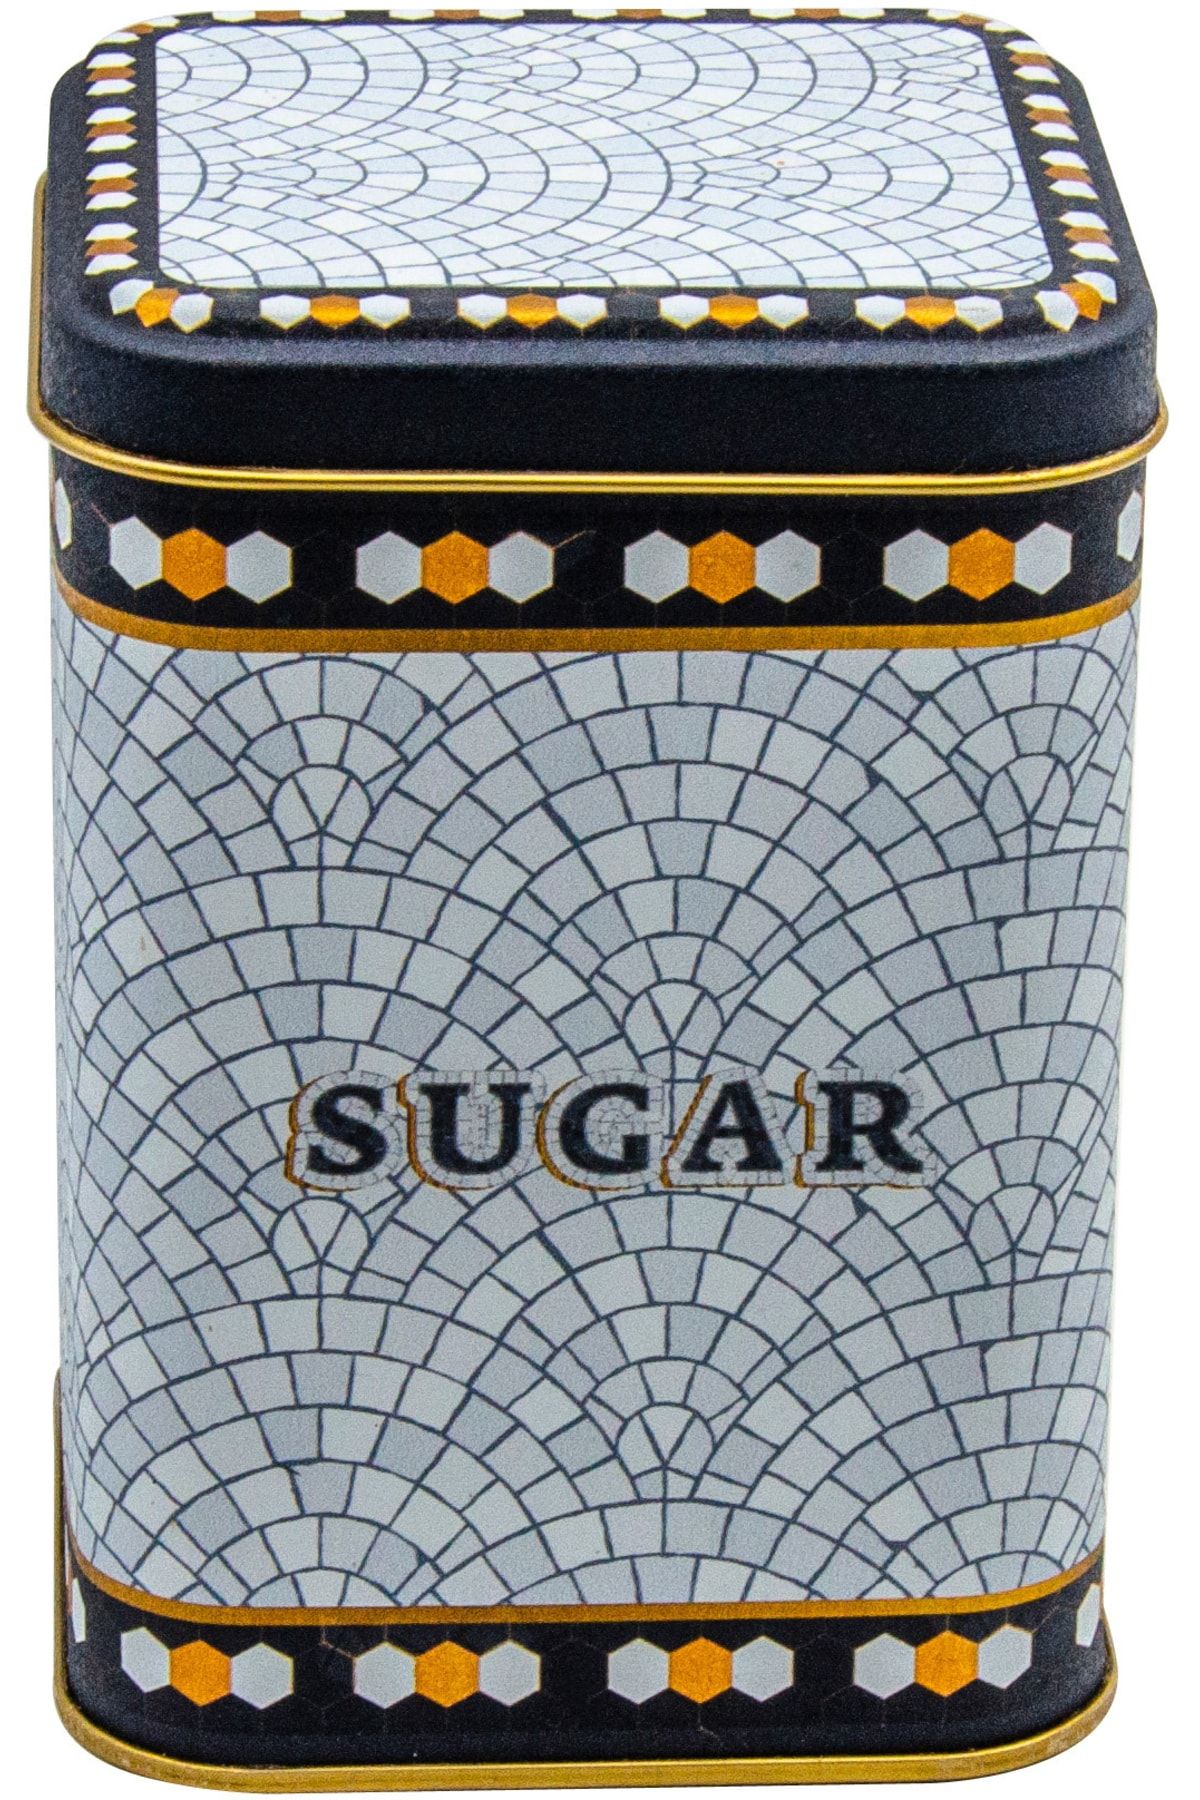 Mosaic Sugar Desenli Kare Metal Kutu, 9 x 9 x 12.5 cm, 1 lt